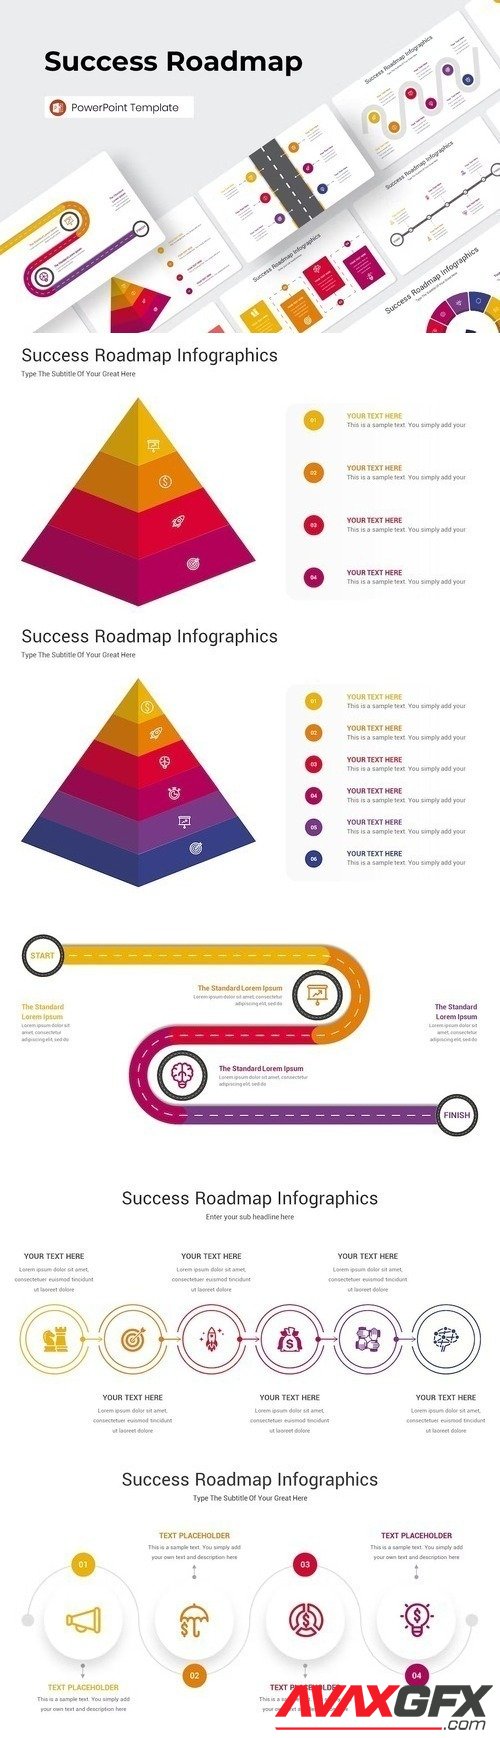 Success Roadmap PowerPoint Template [PPTX]